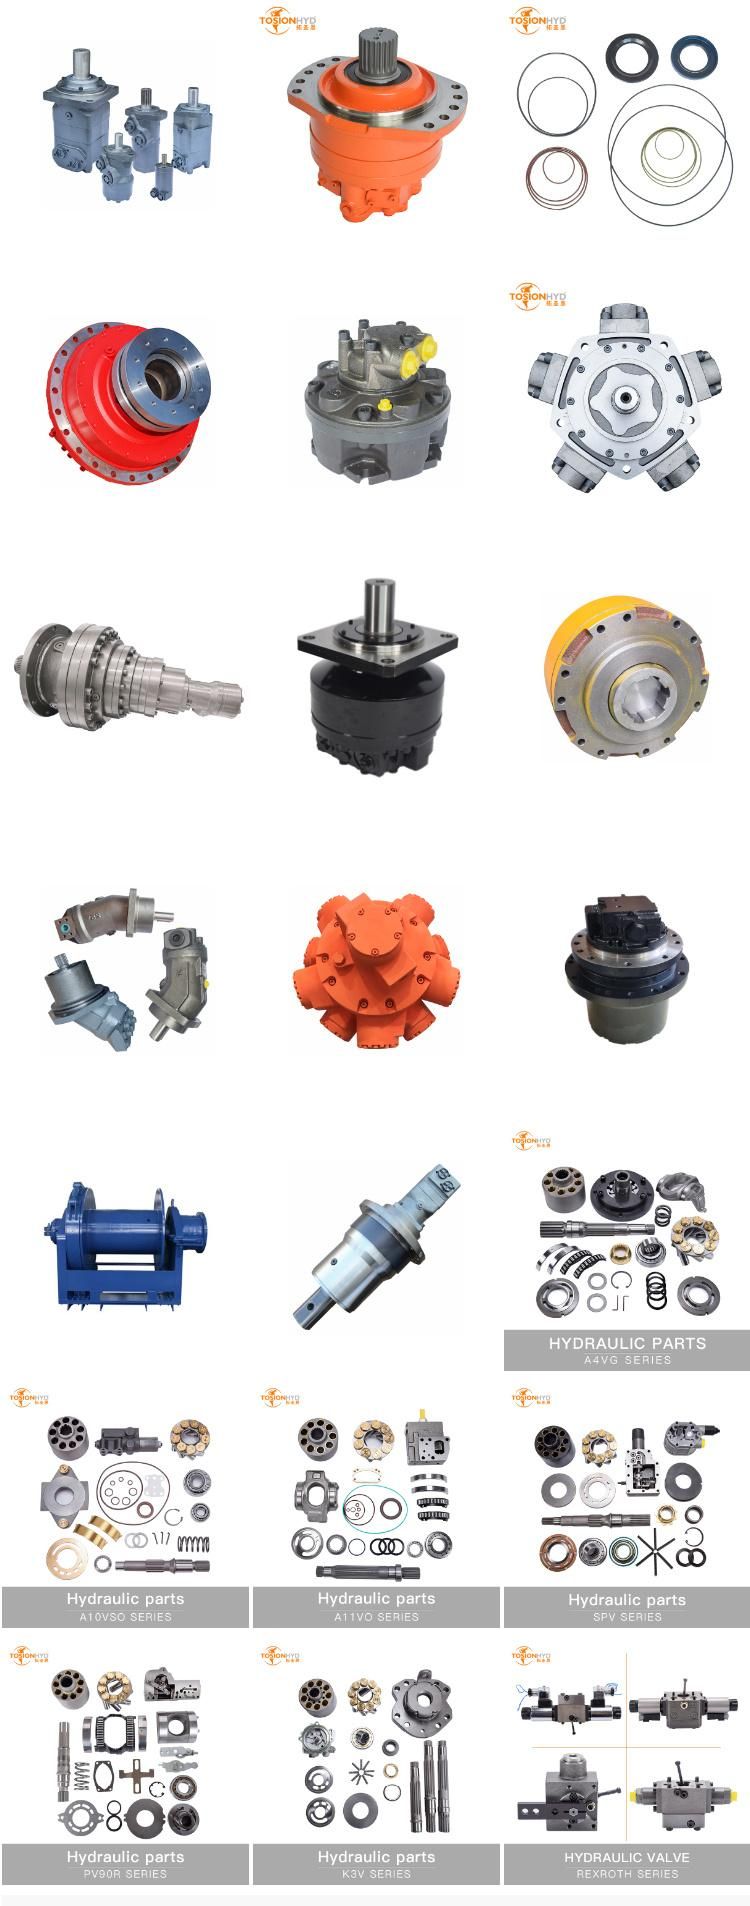 V 15/18/23/38/50/70 Vd2-15A Vd5-15A Mf 18 V15 V18 V23 V38 V50 V70 Mf18 Hydraulic Pump Parts with Daikin Spare Repair Kits